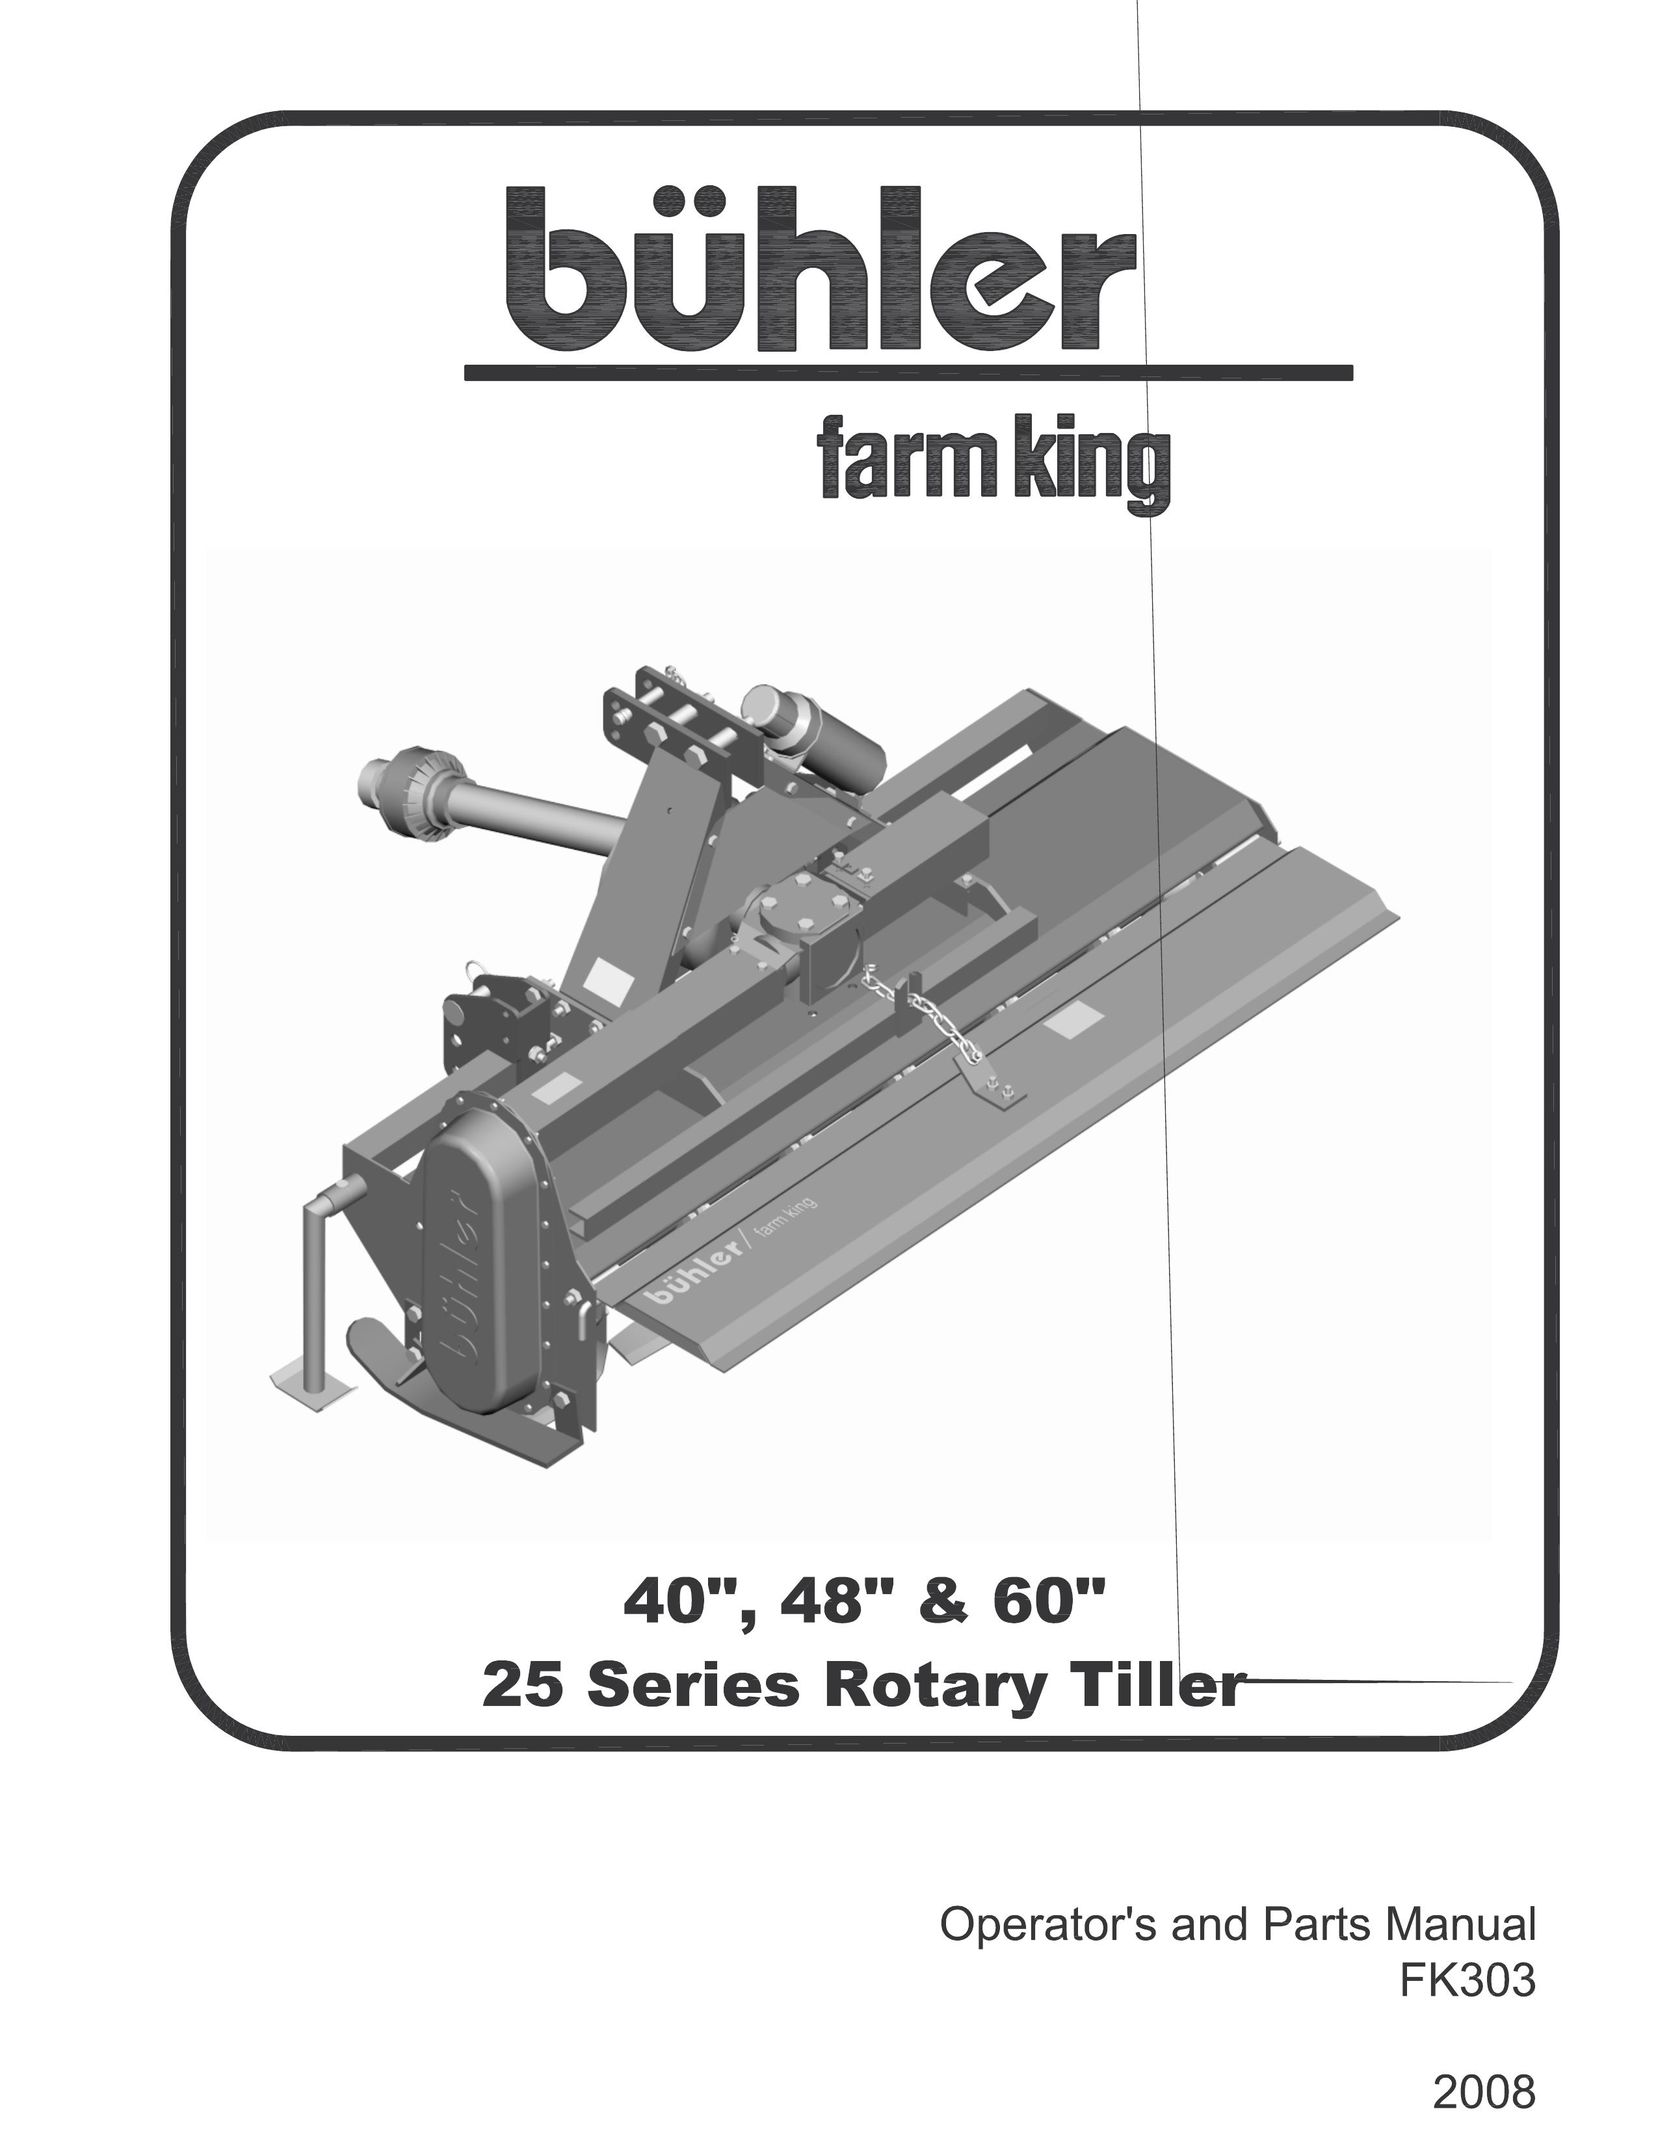 Buhler 25 Series Power Hammer User Manual